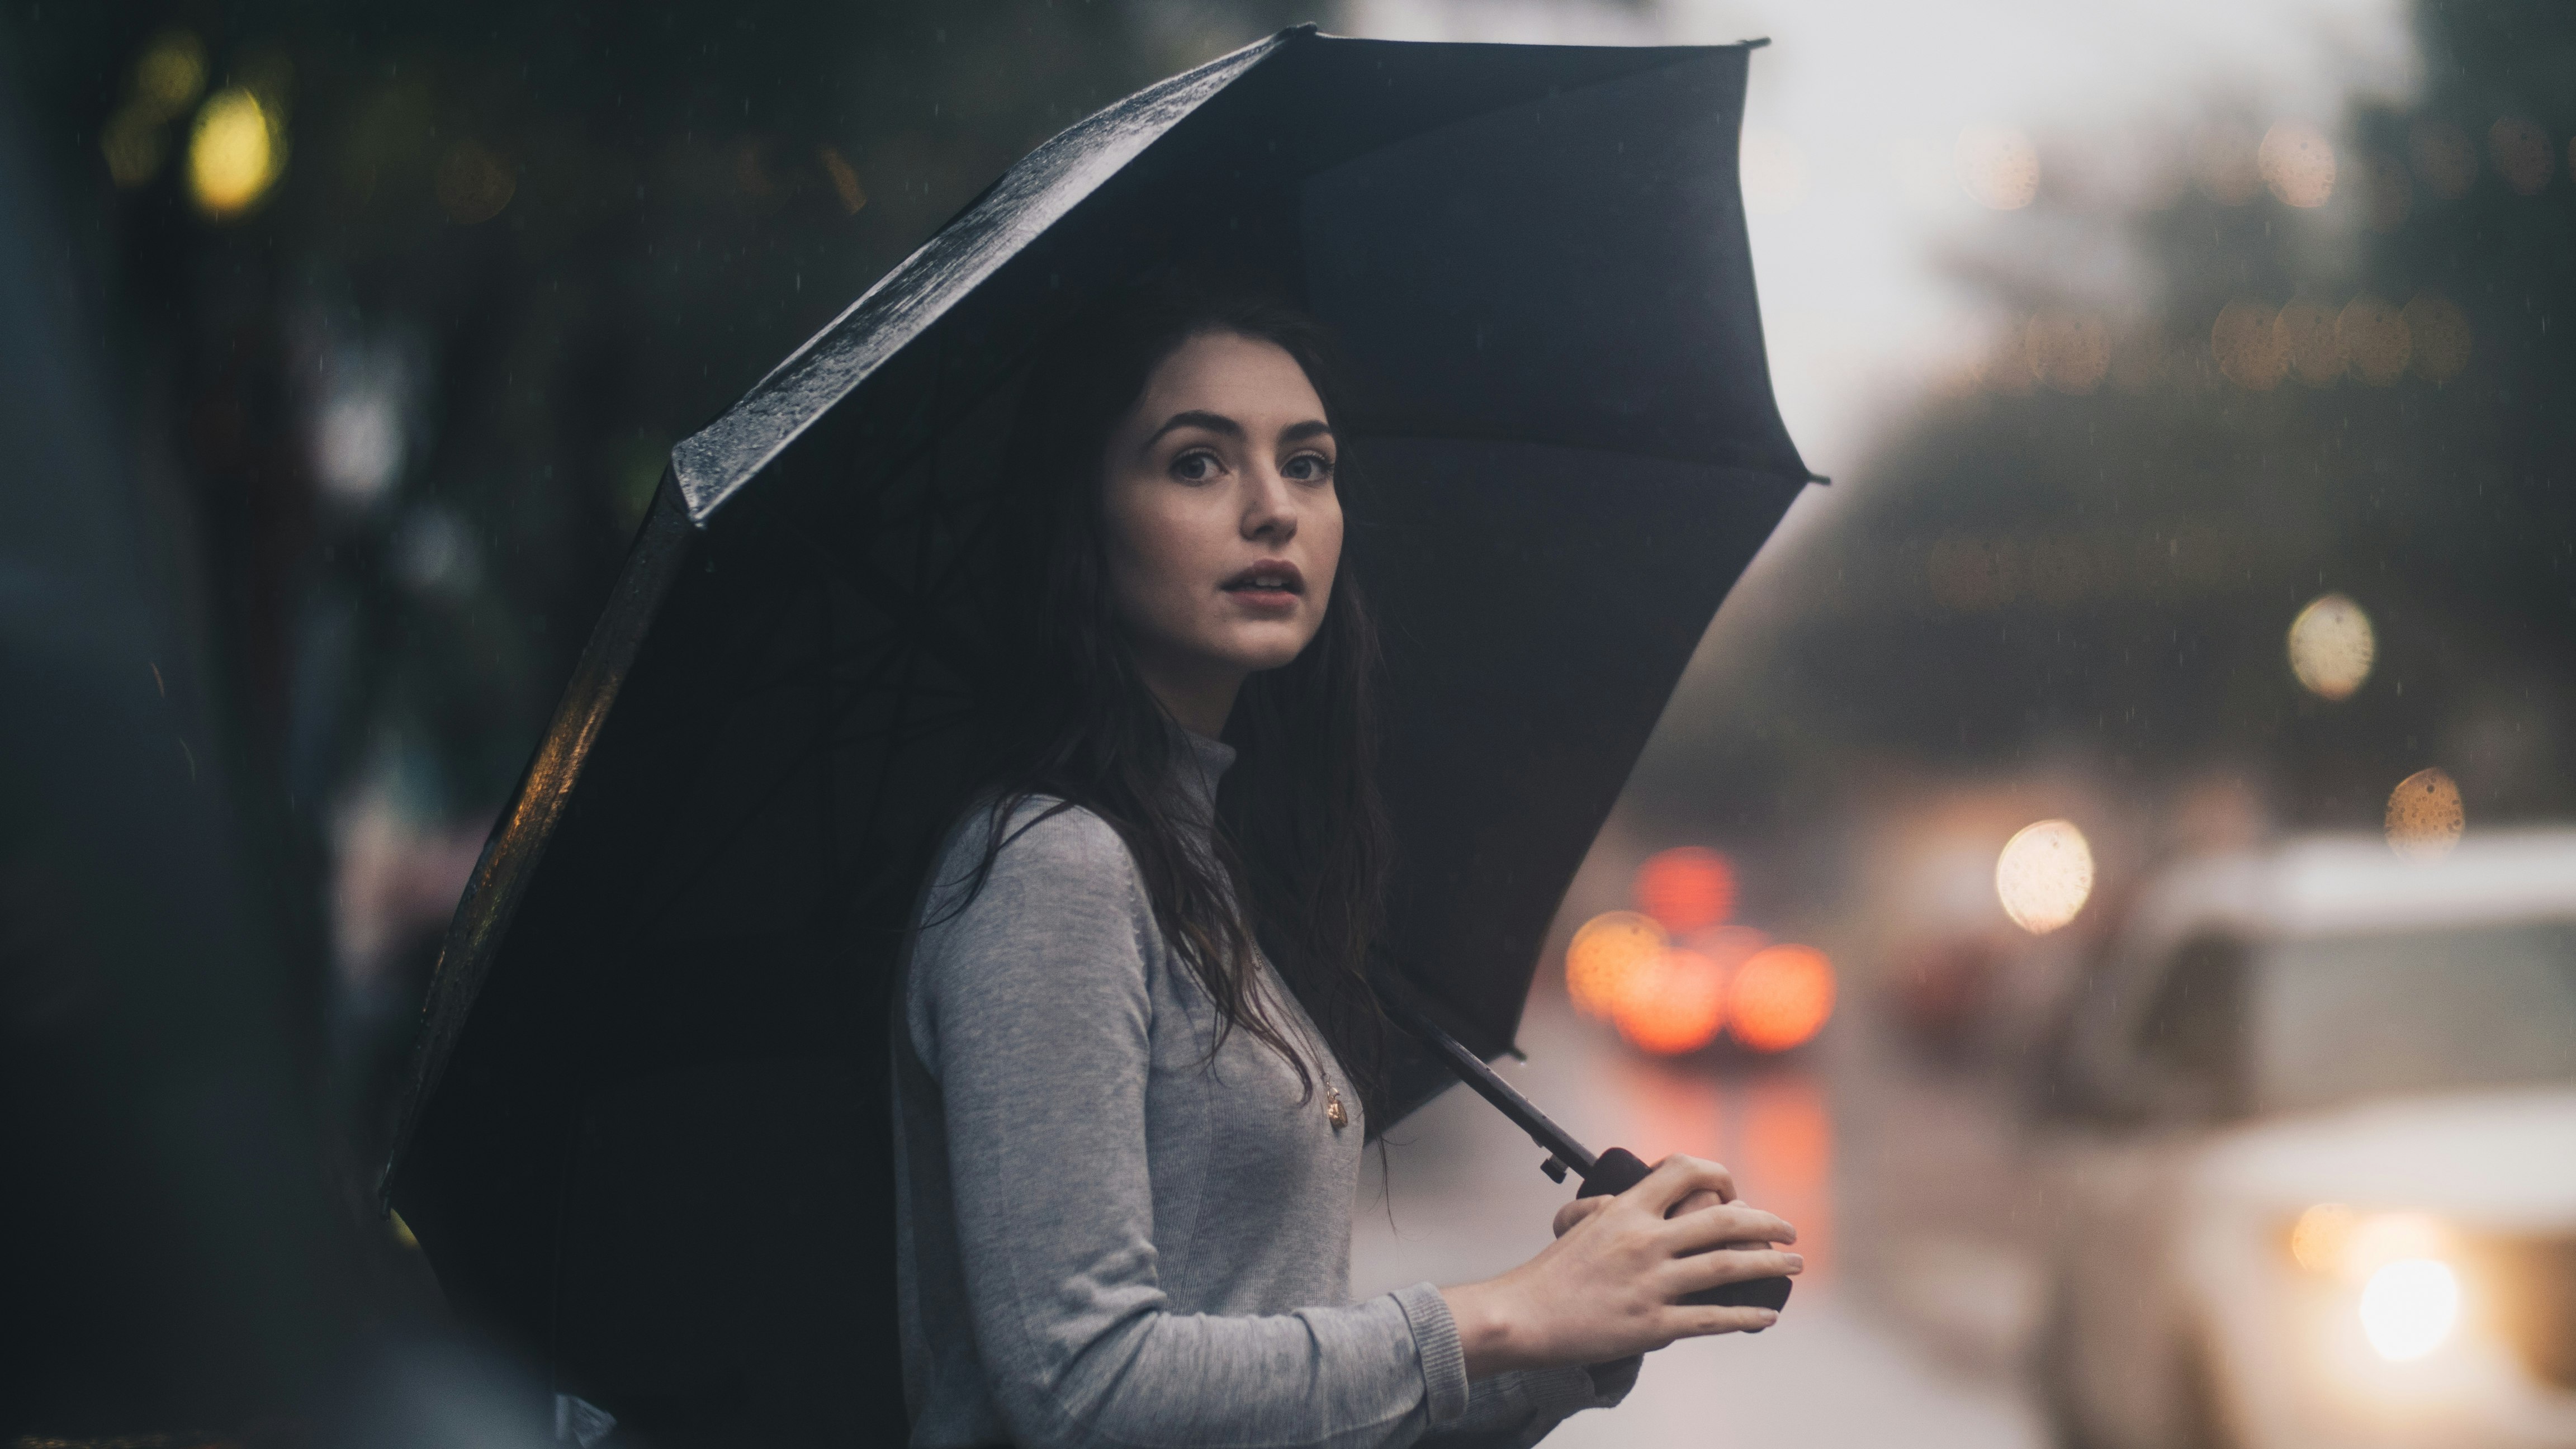 woman on the street holding umbrella